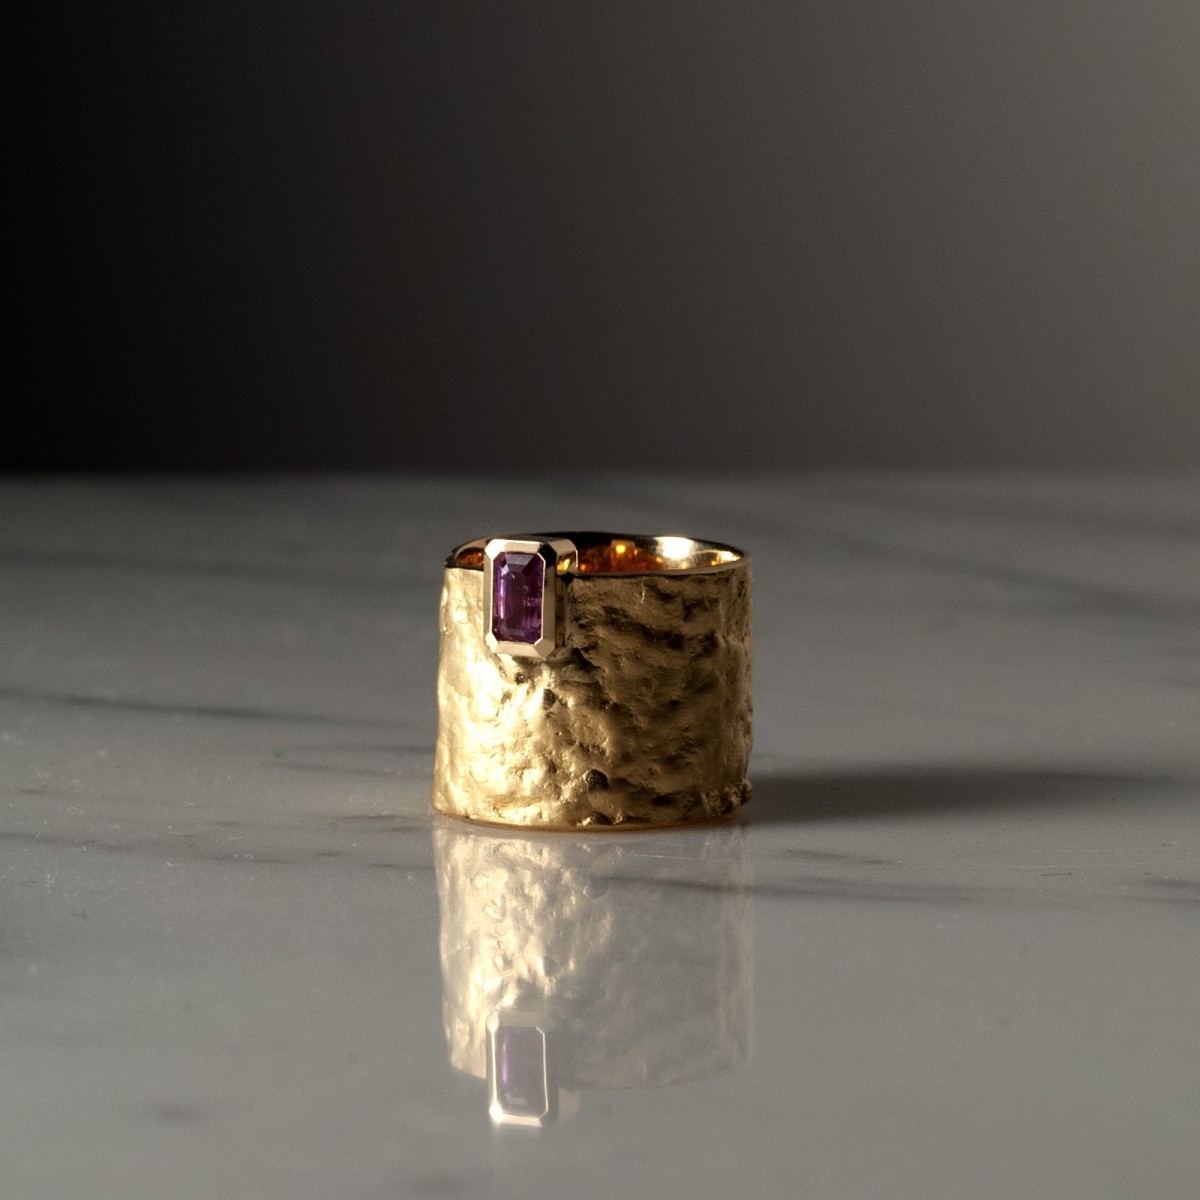 SKIN 2122 - Handmade ring